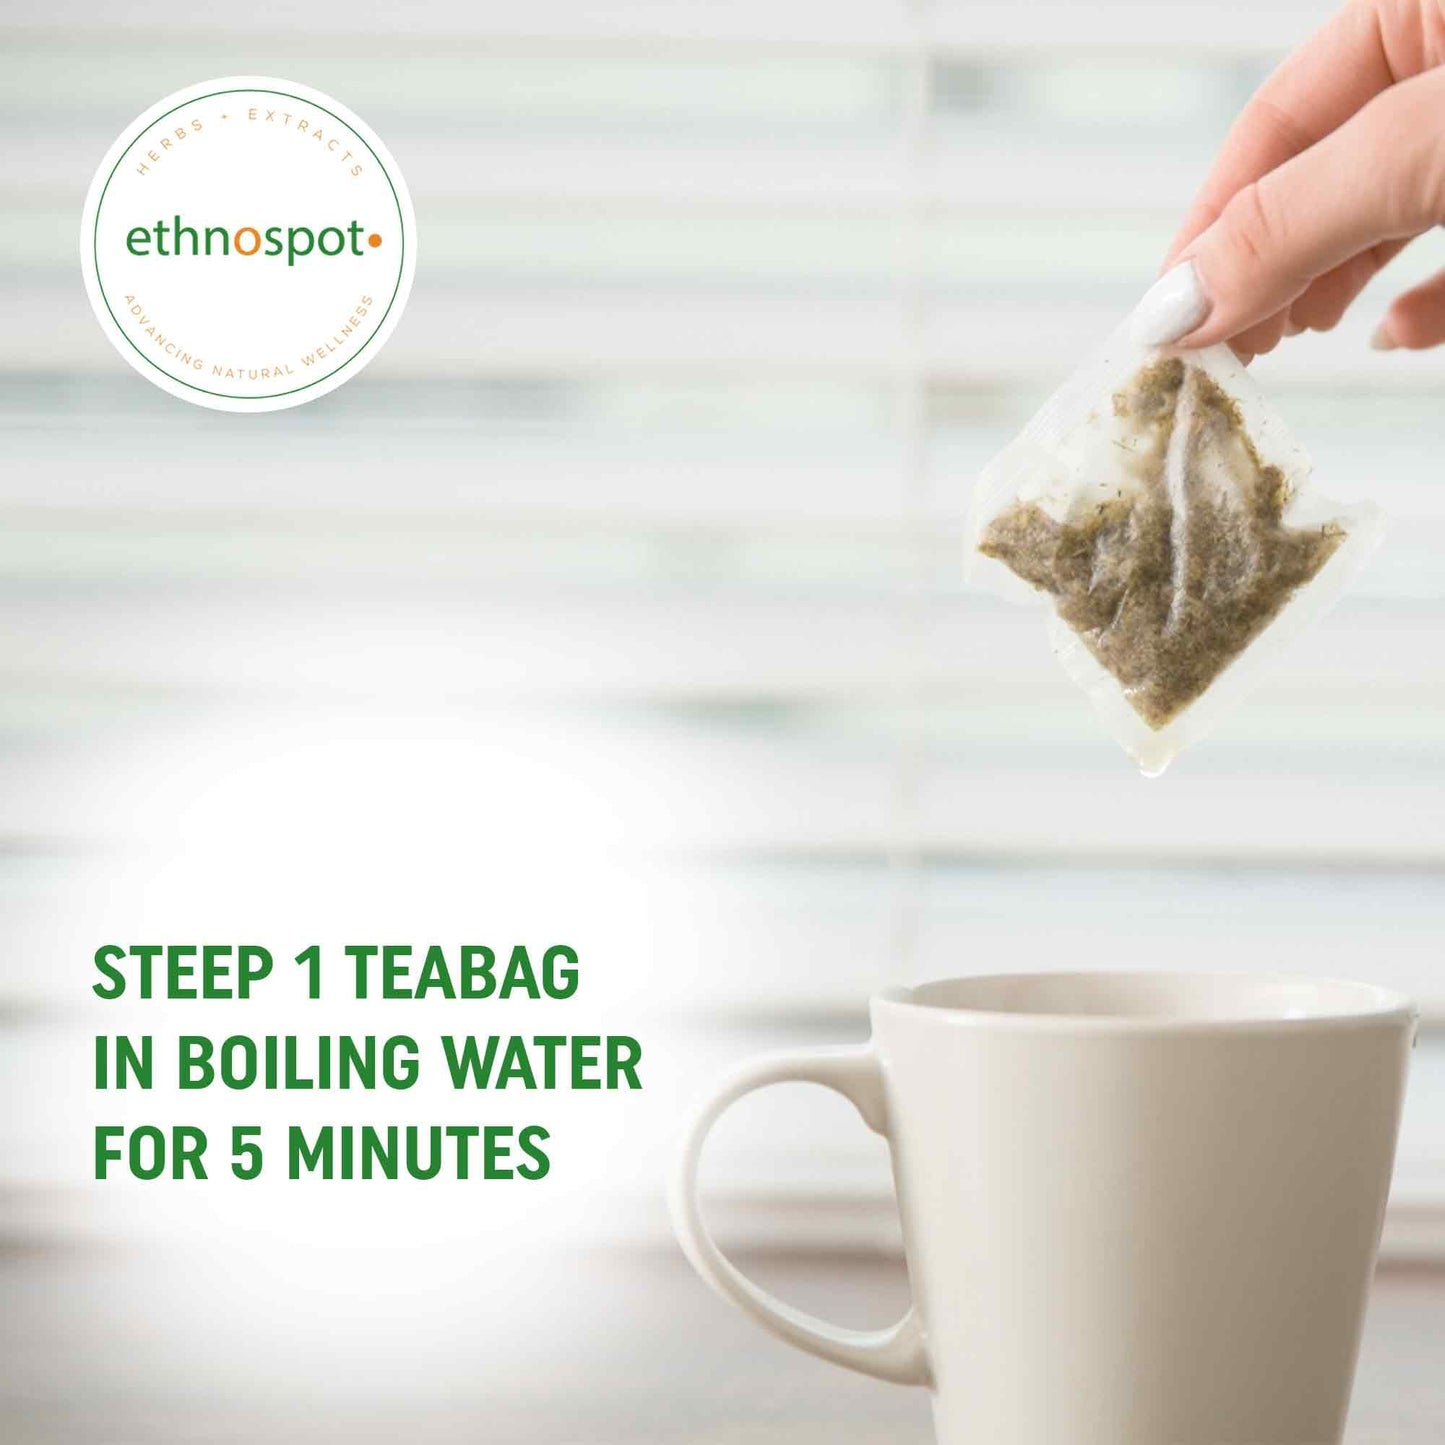 Rhodiola Rosea Teabags - Stress Reducing Adaptogenic Herbal Tea